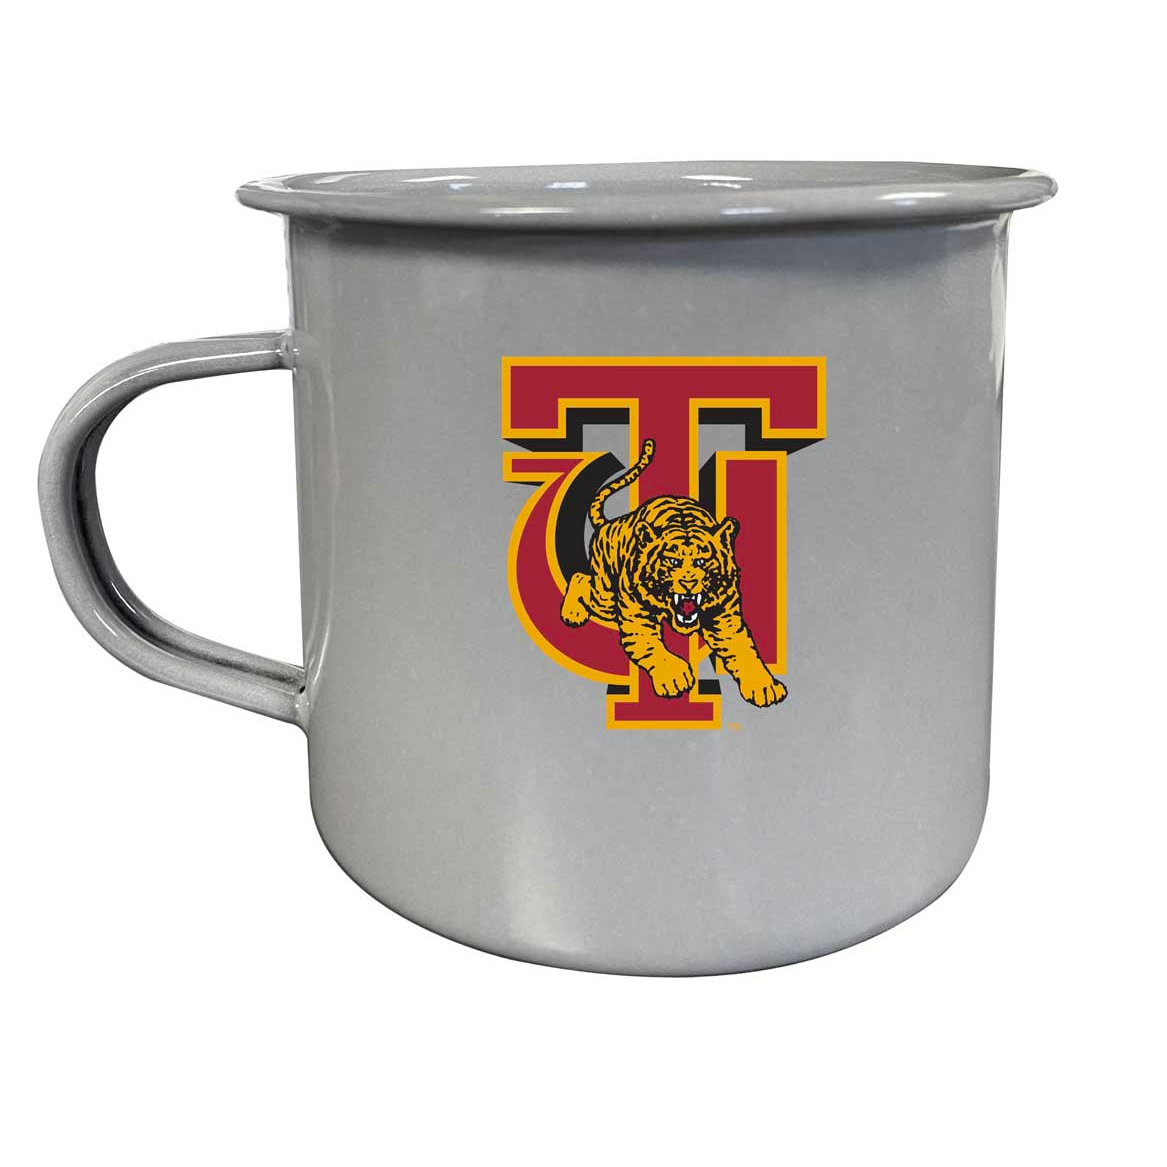 Tuskegee University Tin Camper Coffee Mug - Choose Your Color - White